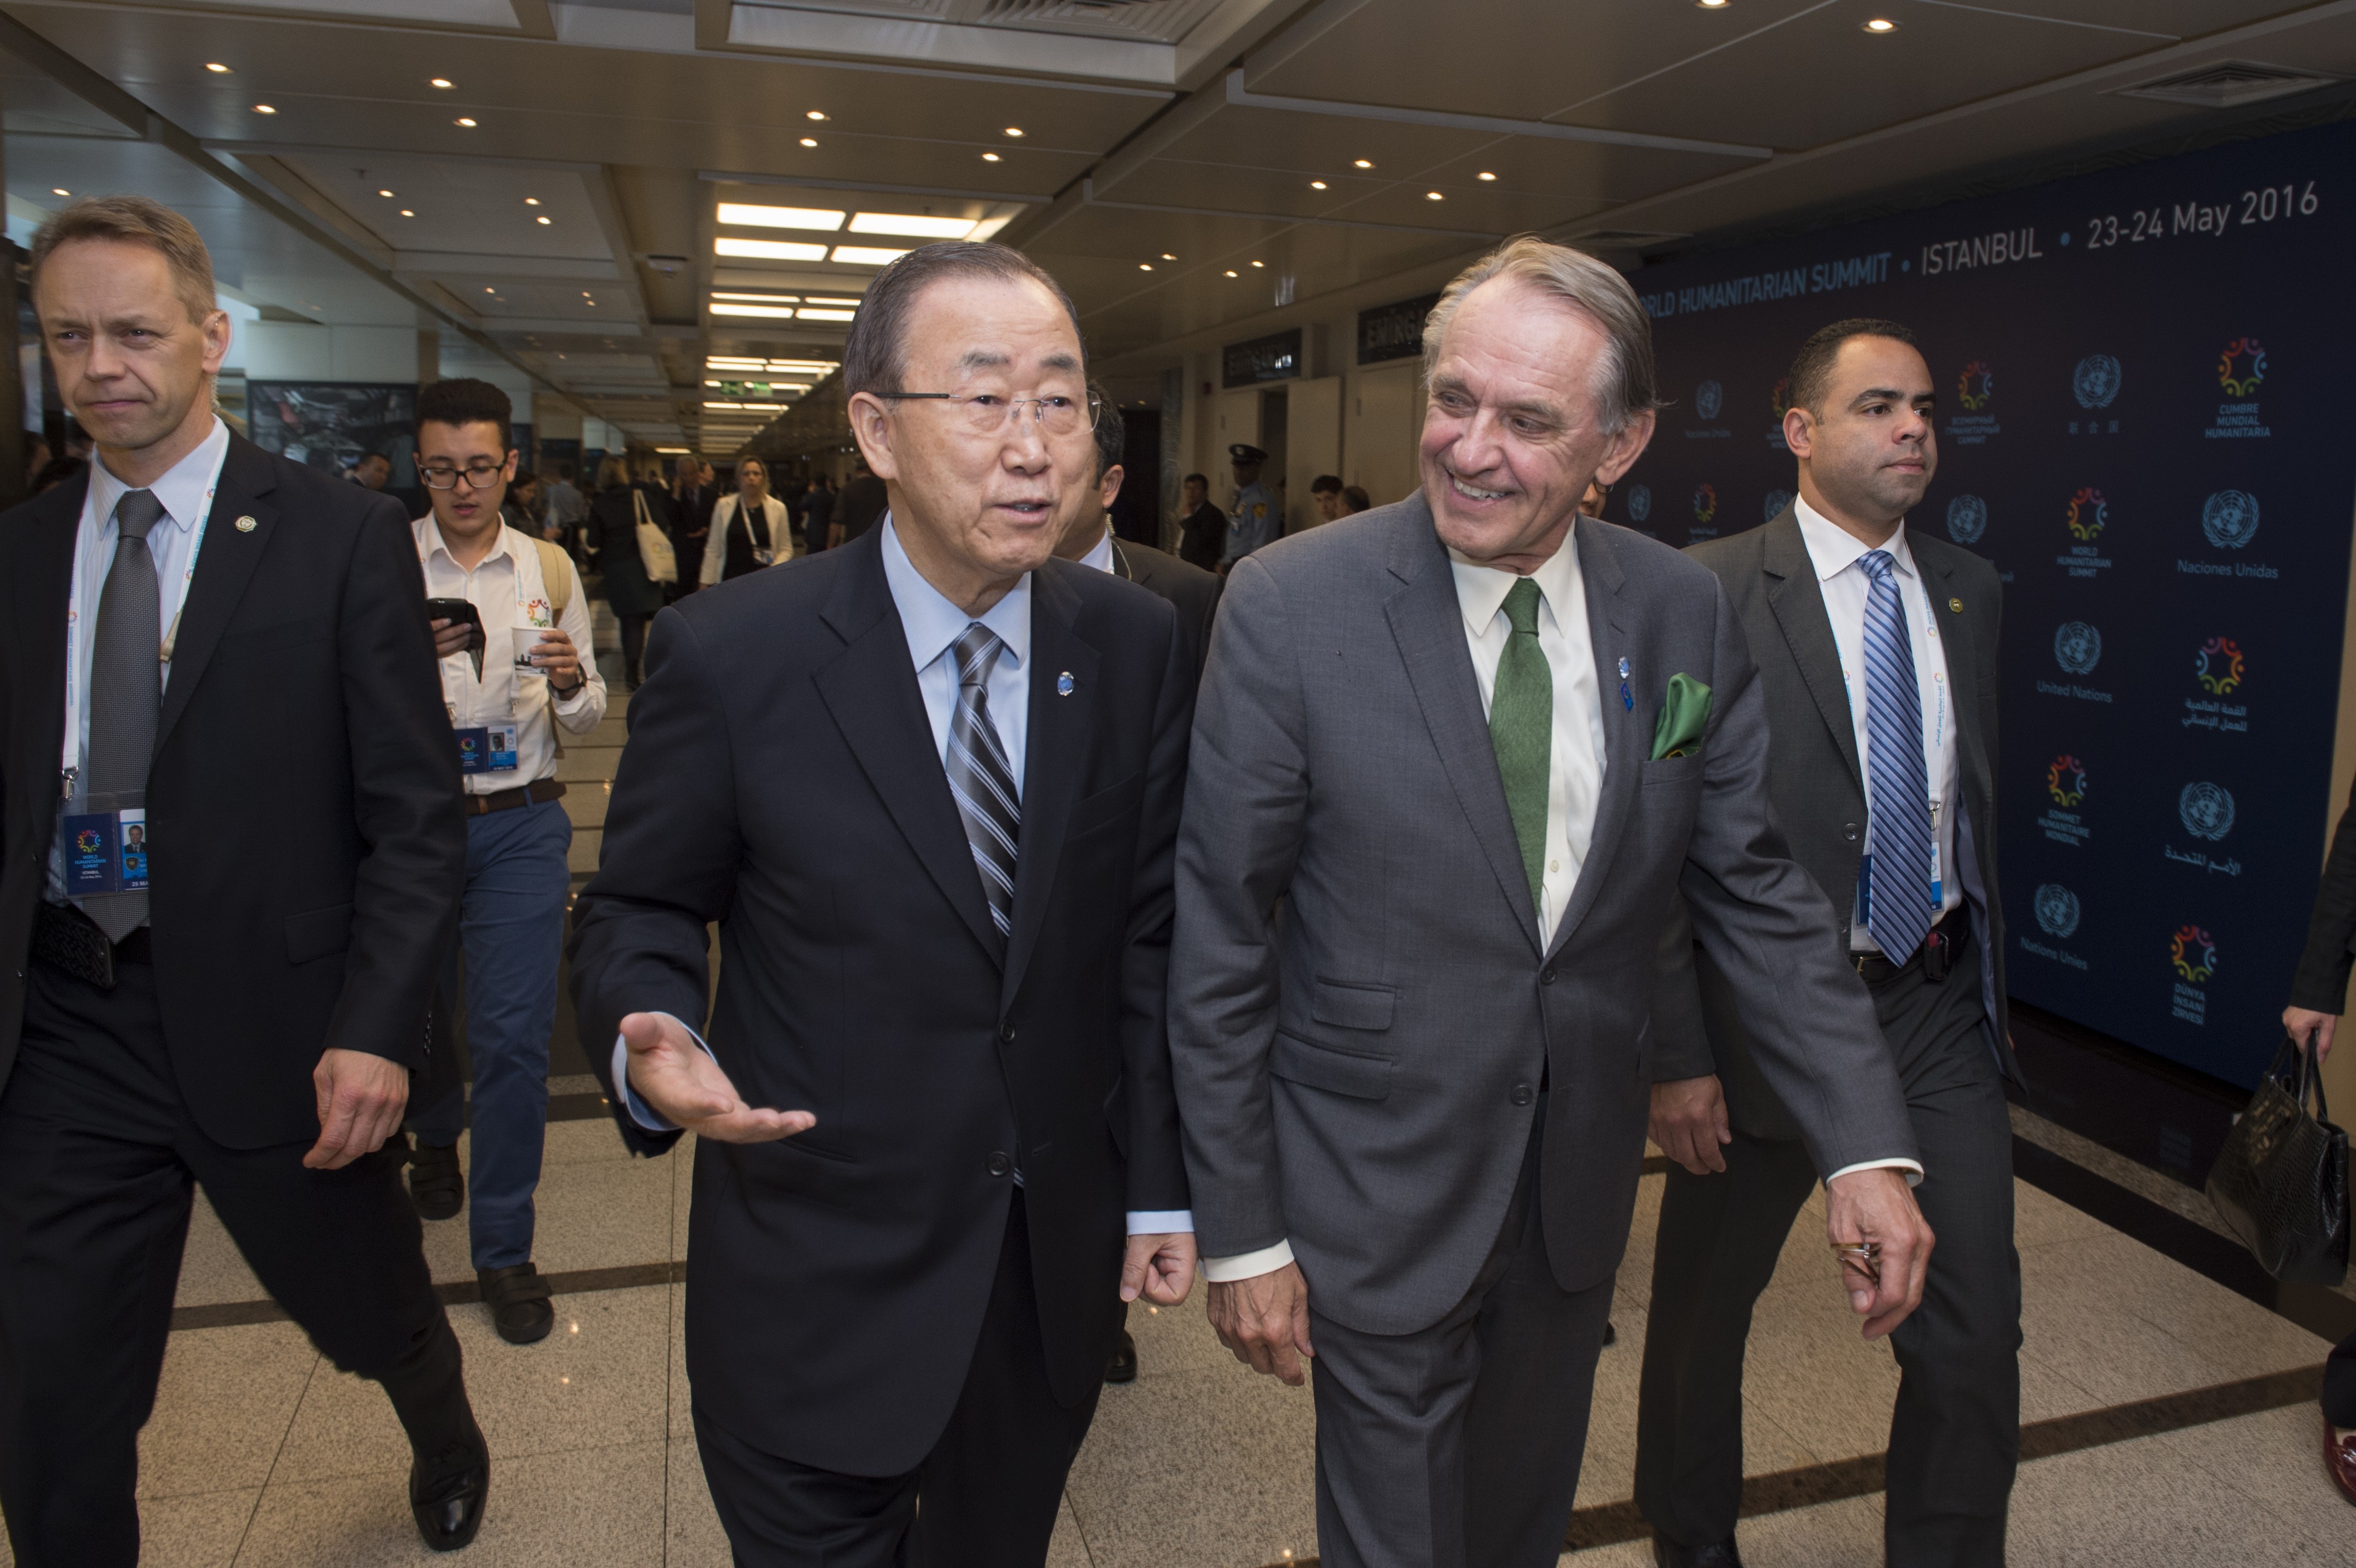 Secretary-General Ban Ki-moon and Deputy Secretary-General Jan Eliasson at the Summit.